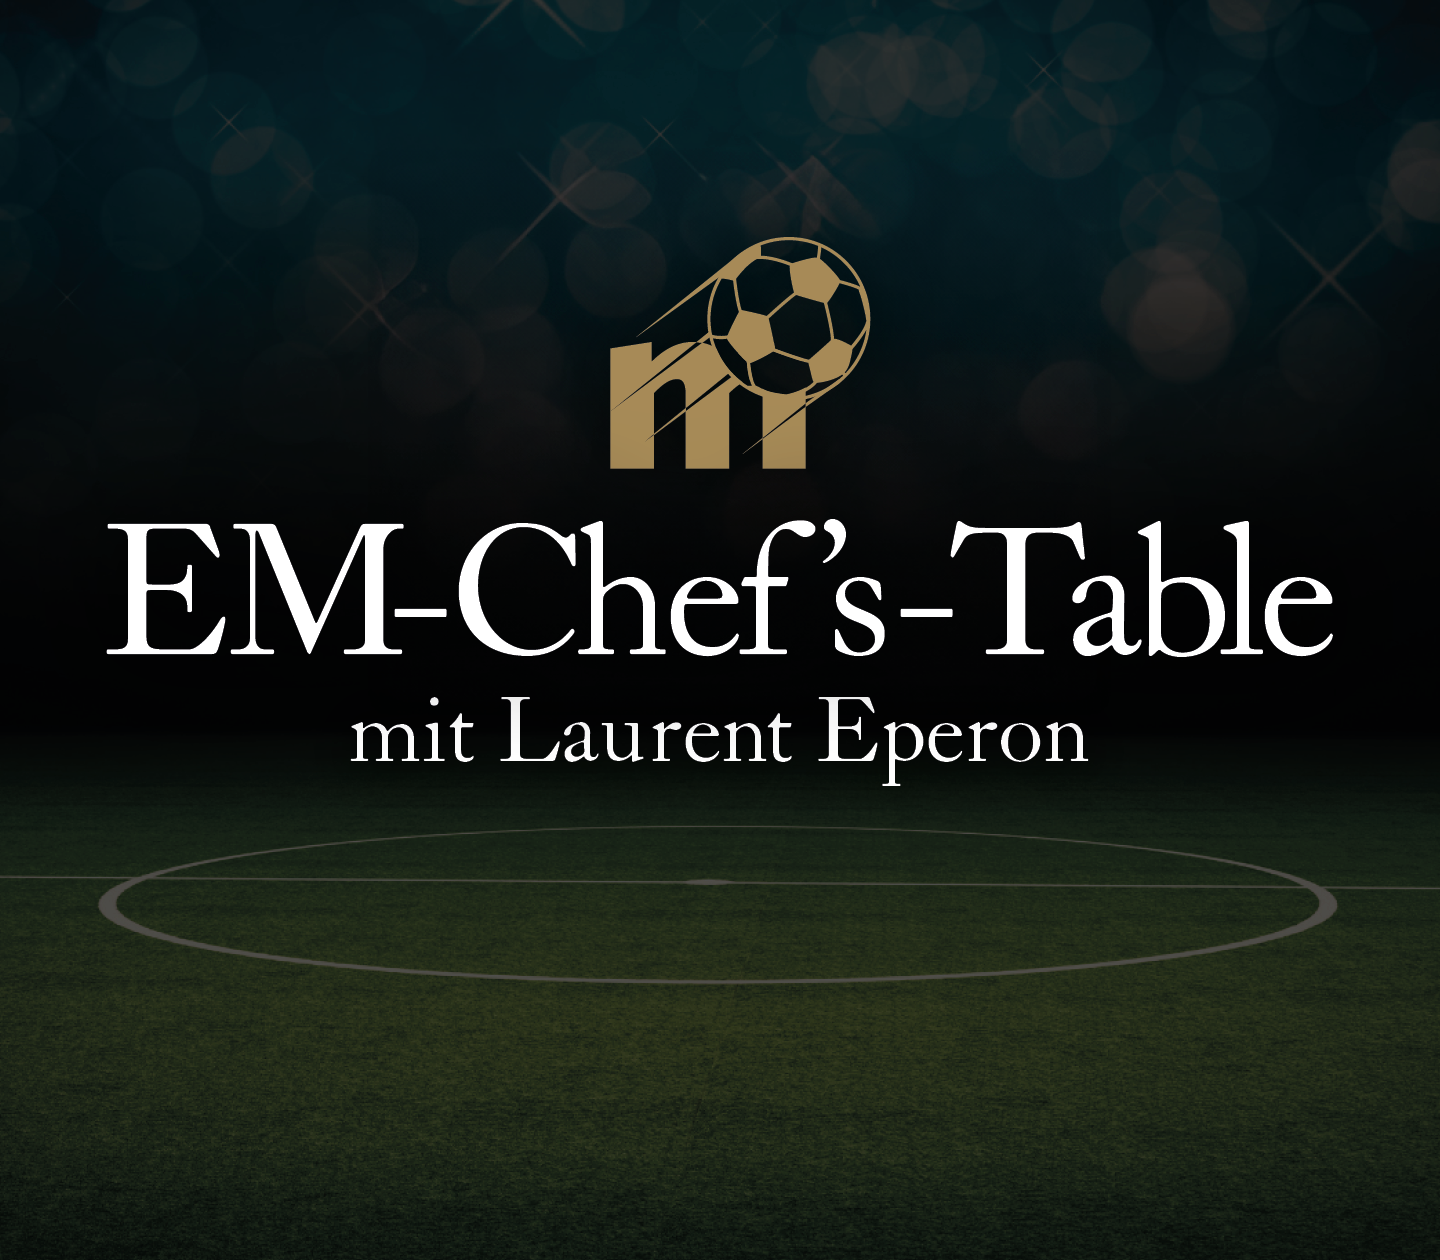 EM-Chef's-Table   NIEDERLANDE vs ÖSTERREICH